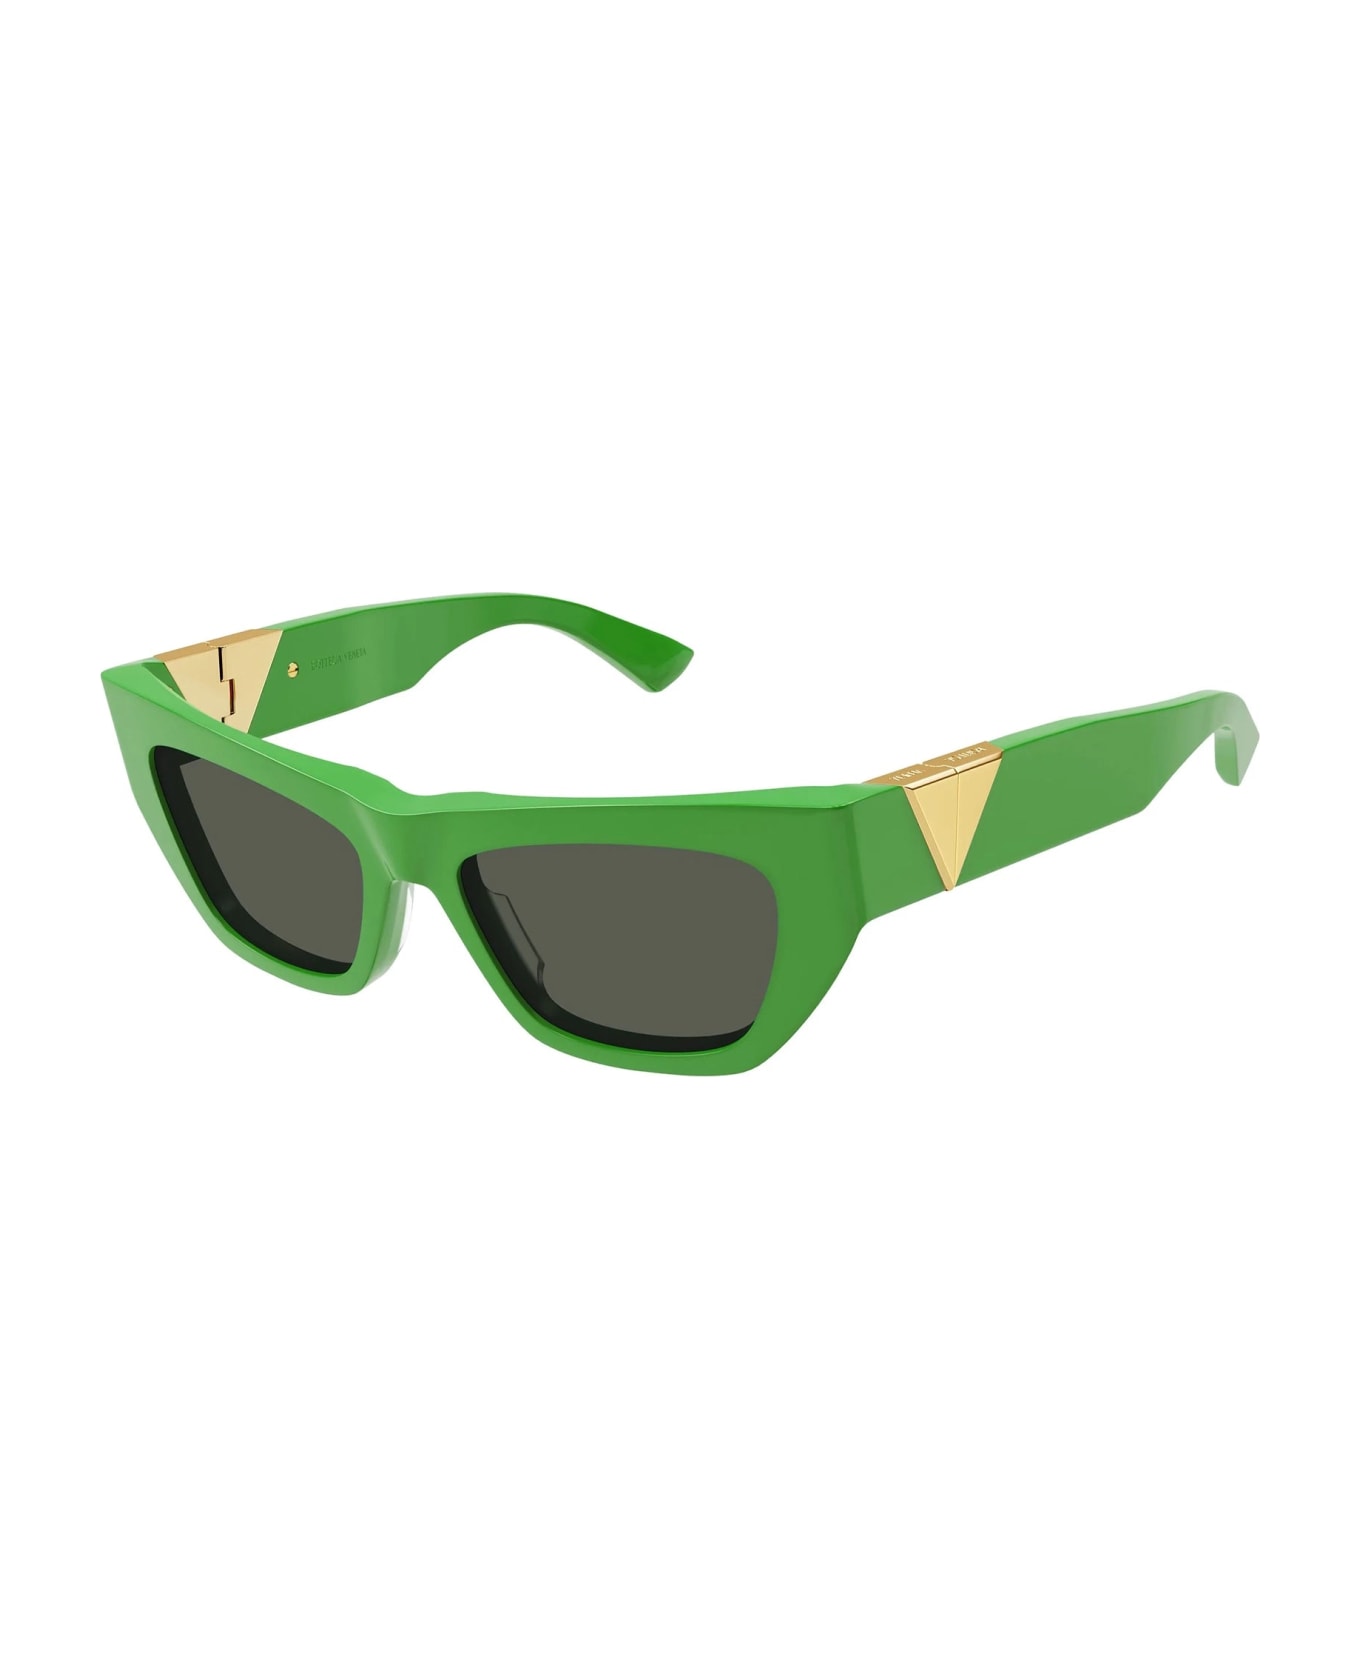 Bottega Veneta Eyewear Bv1177s-003 - Green Sunglasses - green サングラス